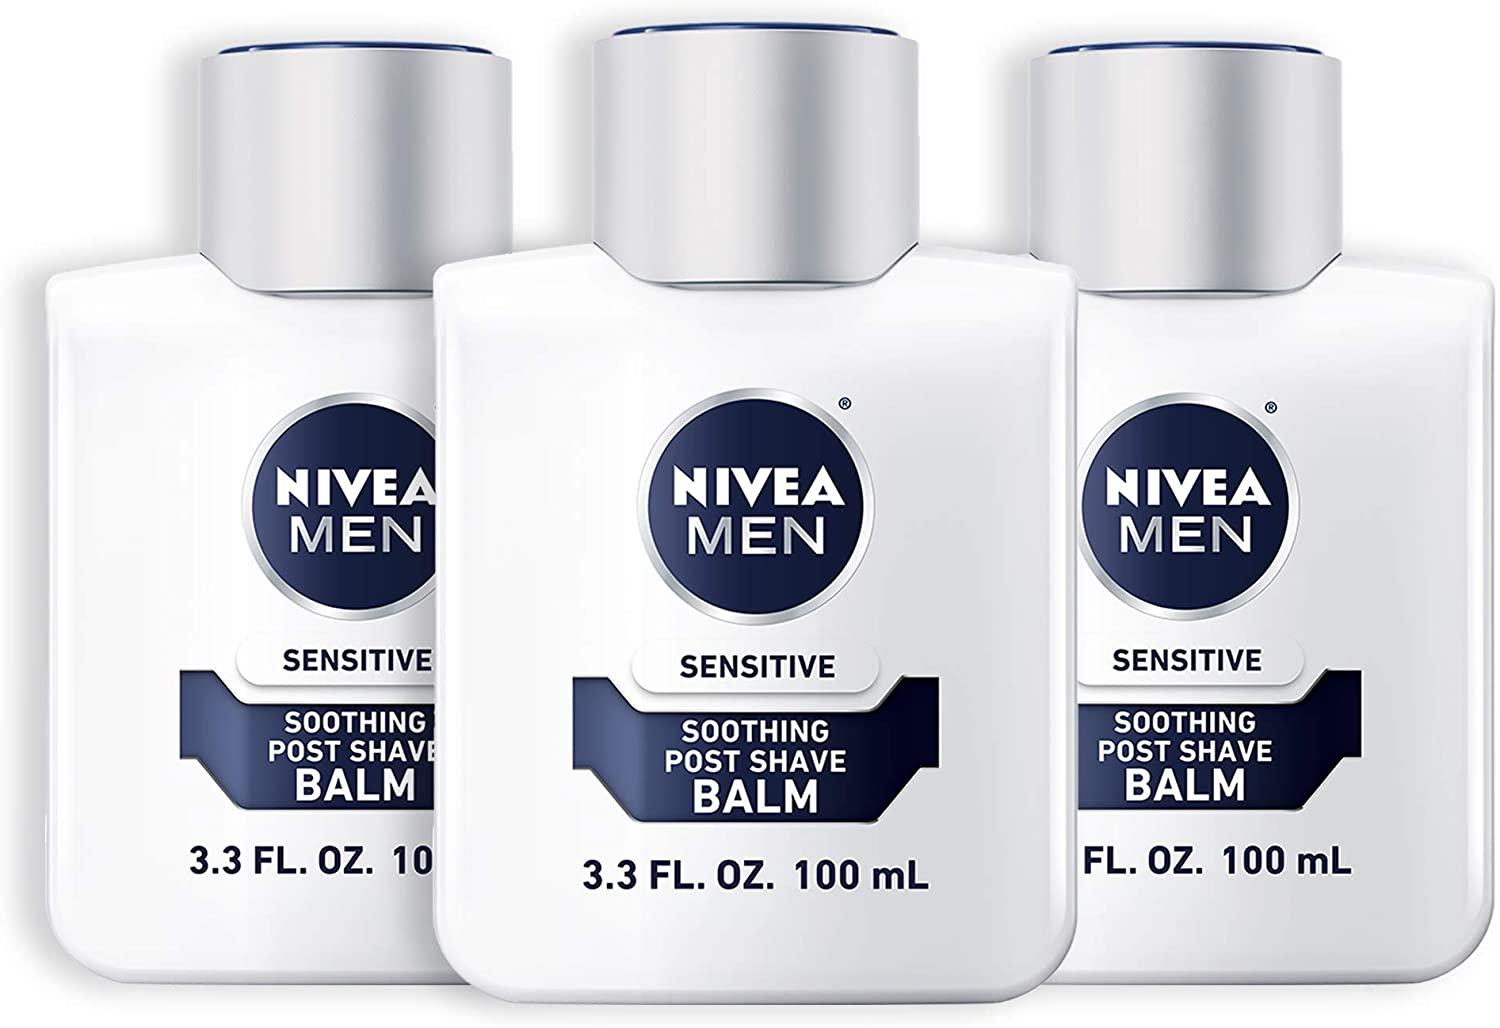 3 Nivea Men Sensitive Post Shave Balm for $5.37 Shipped